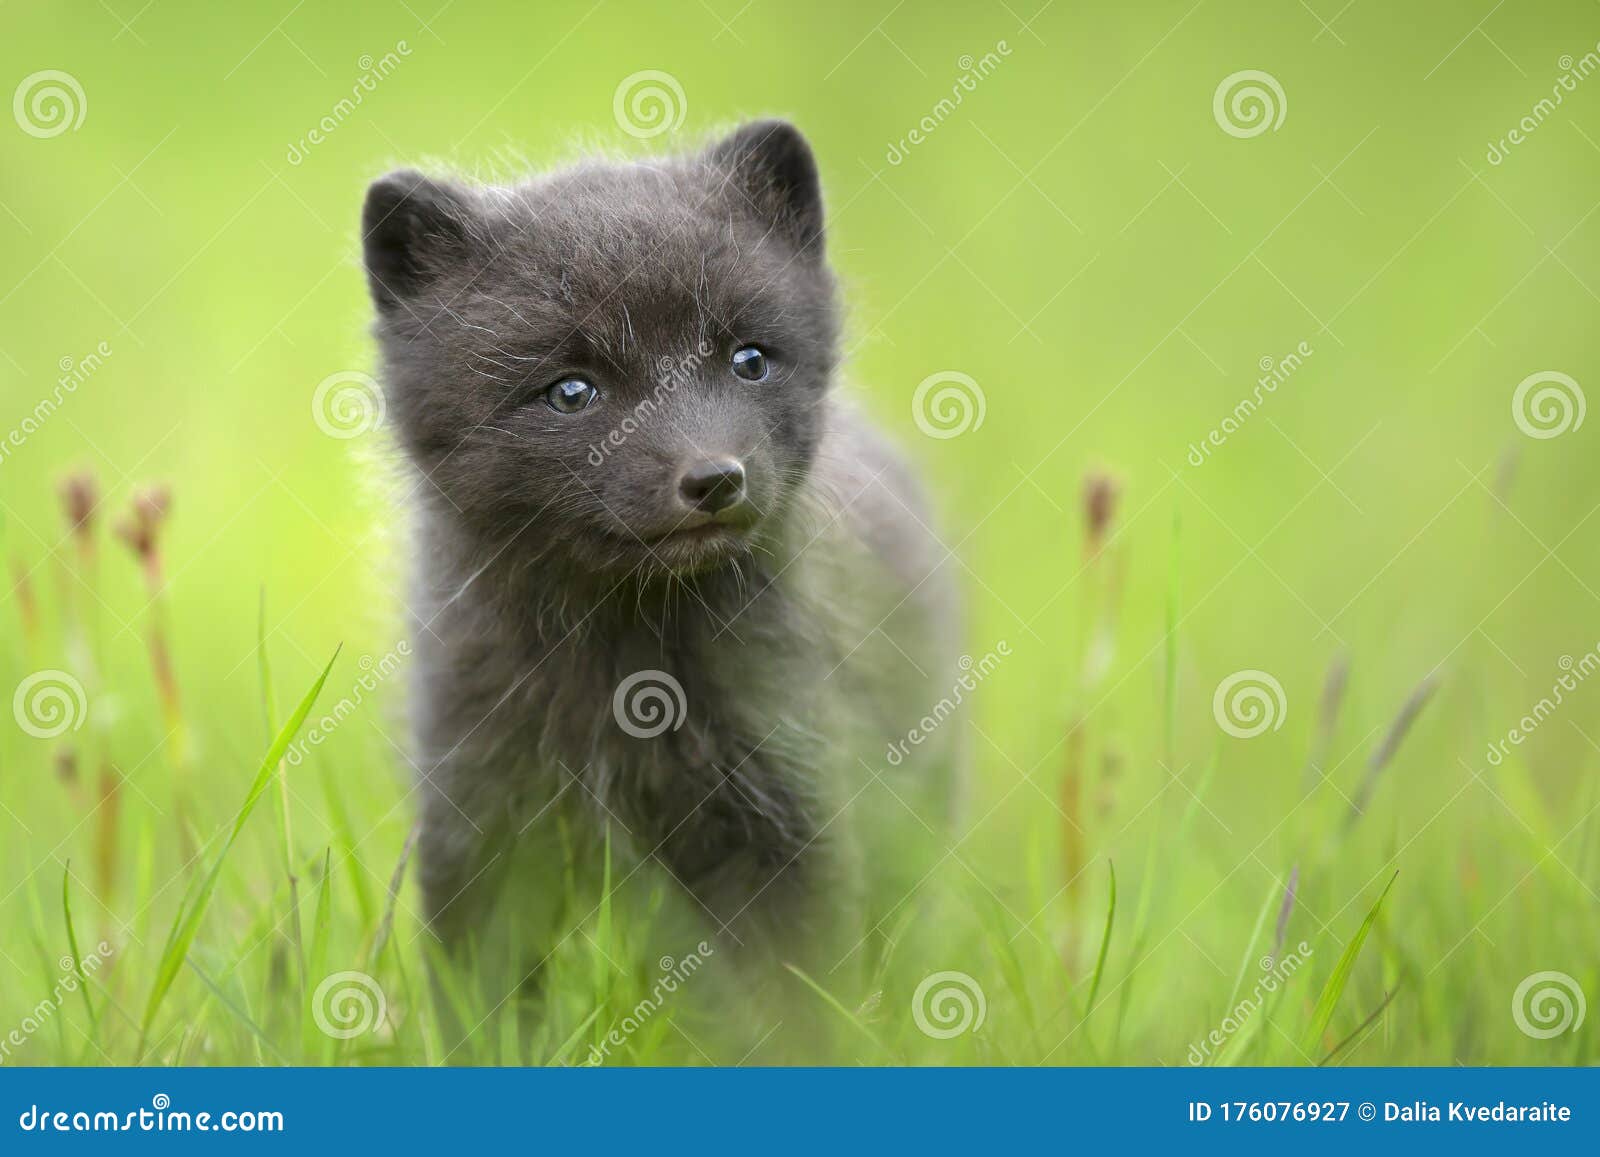 Baby Arctic Fox Wallpapers - Top Free Baby Arctic Fox Backgrounds ...